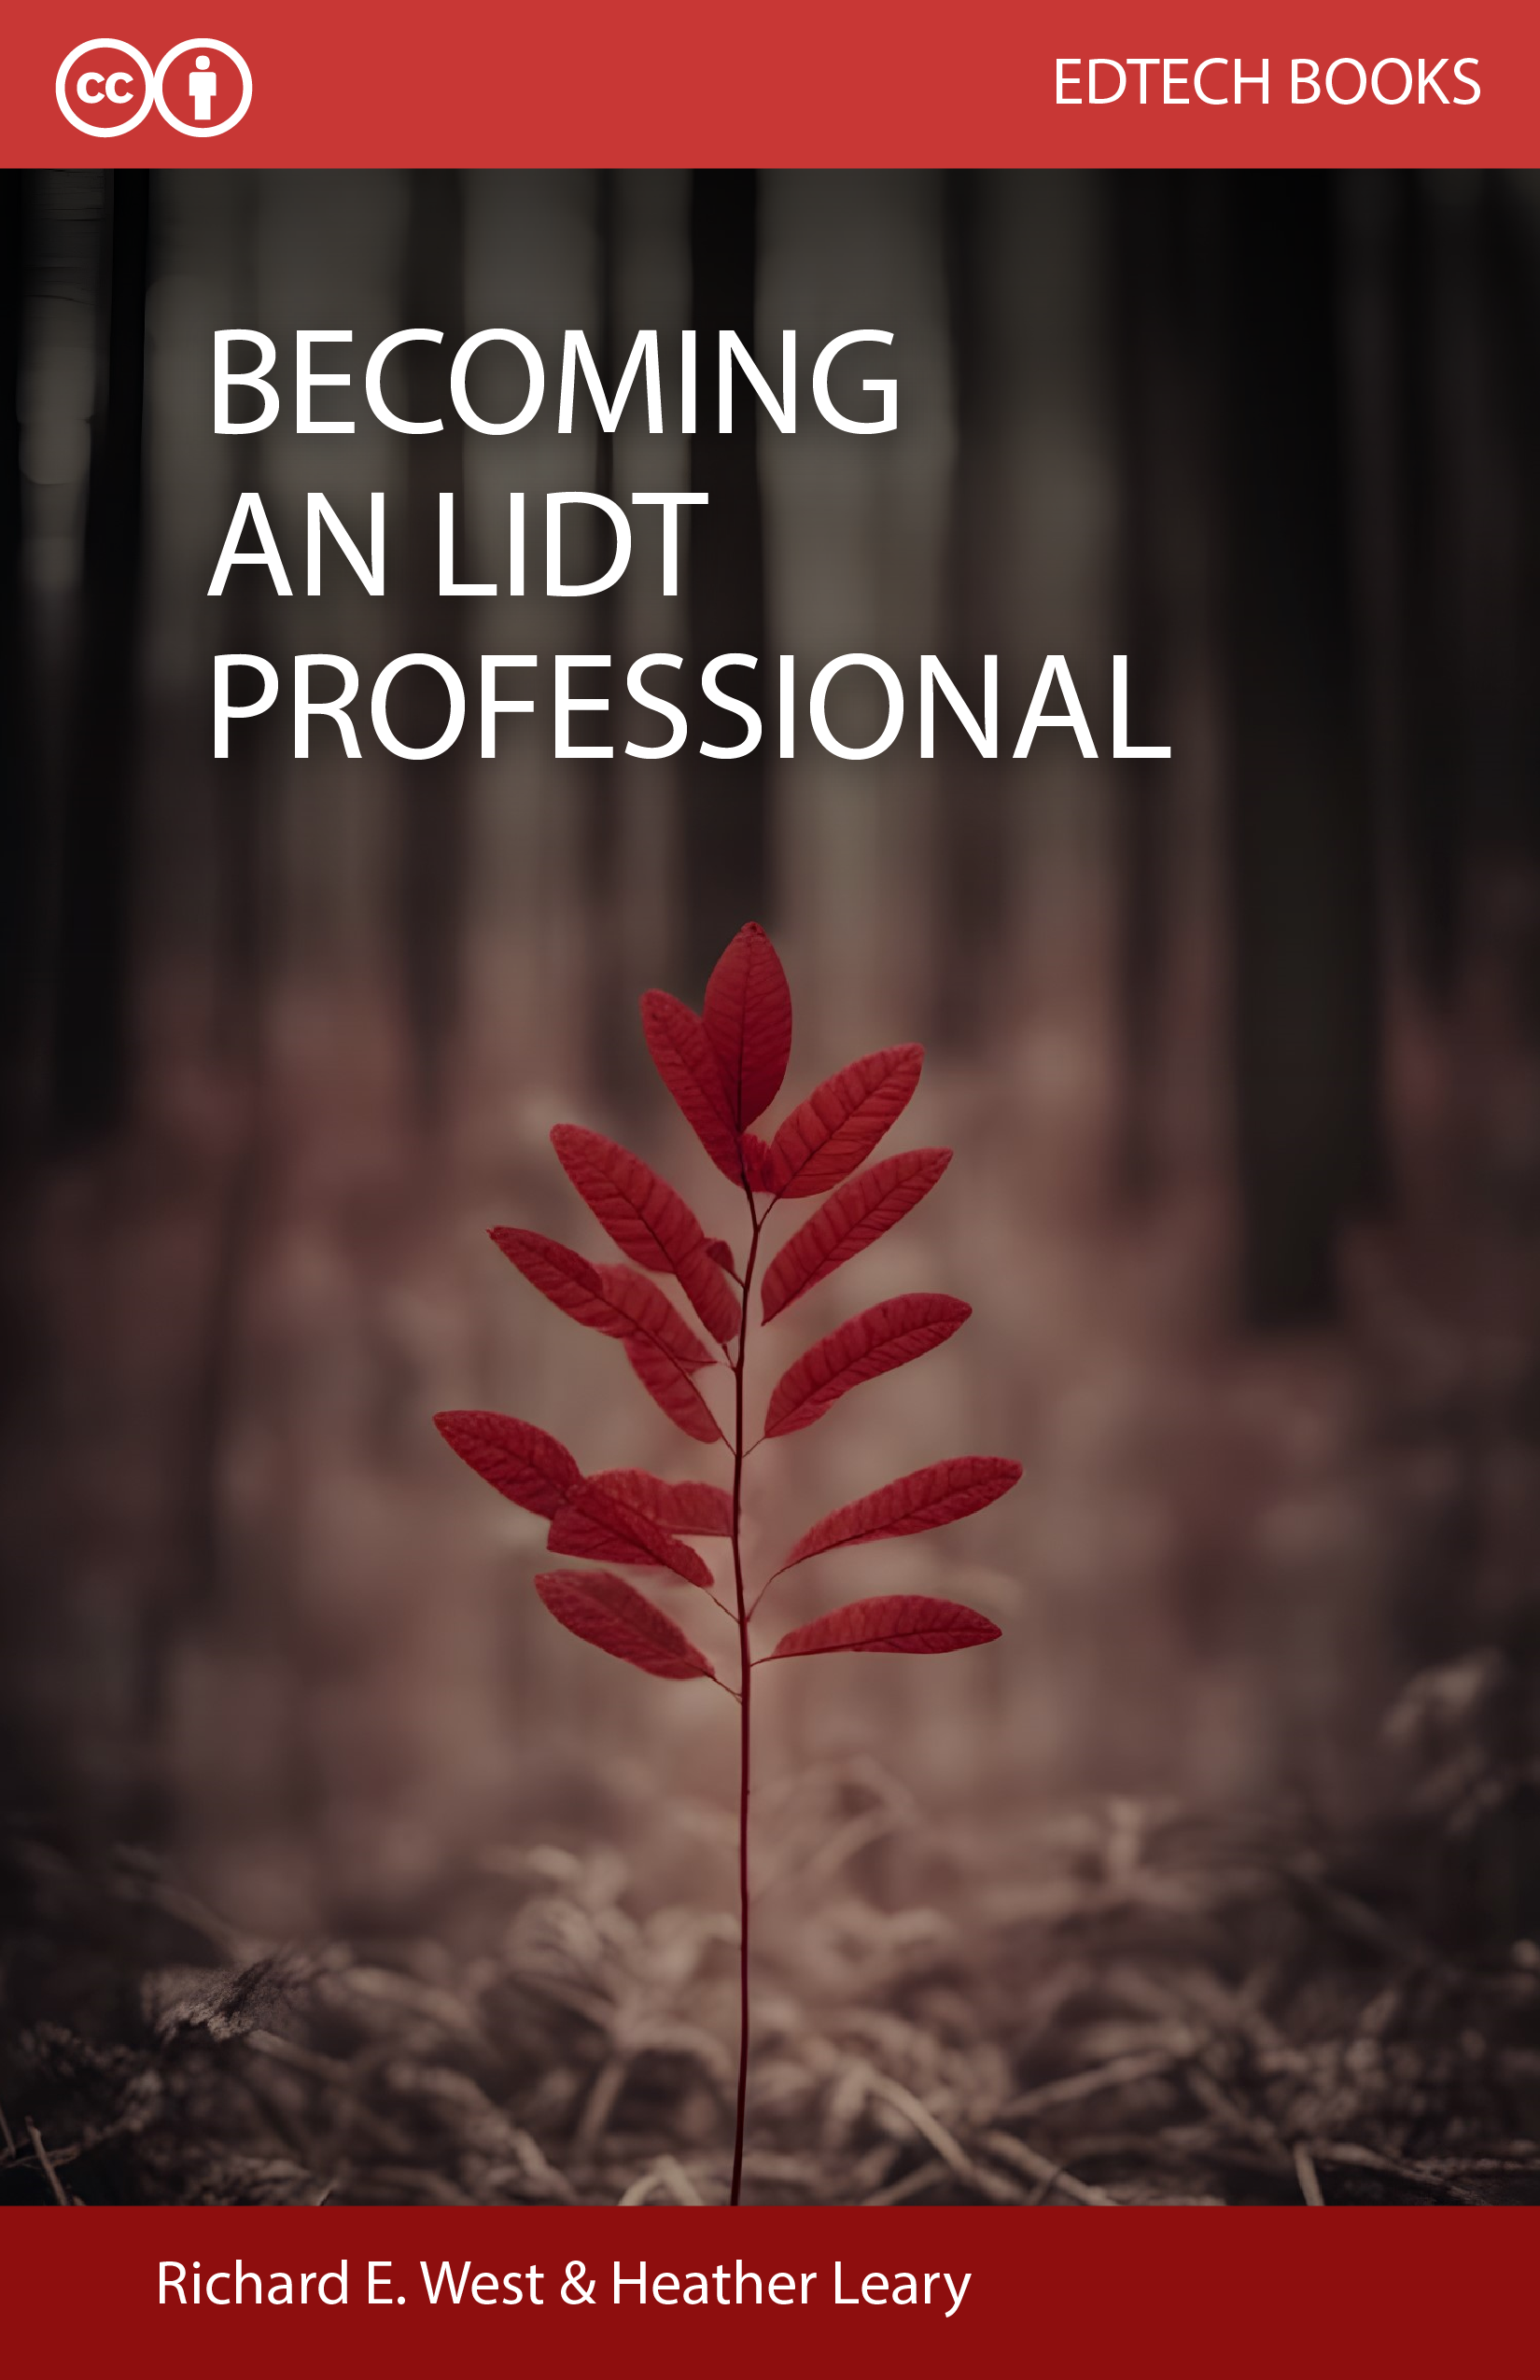 Becoming an LIDT Professional